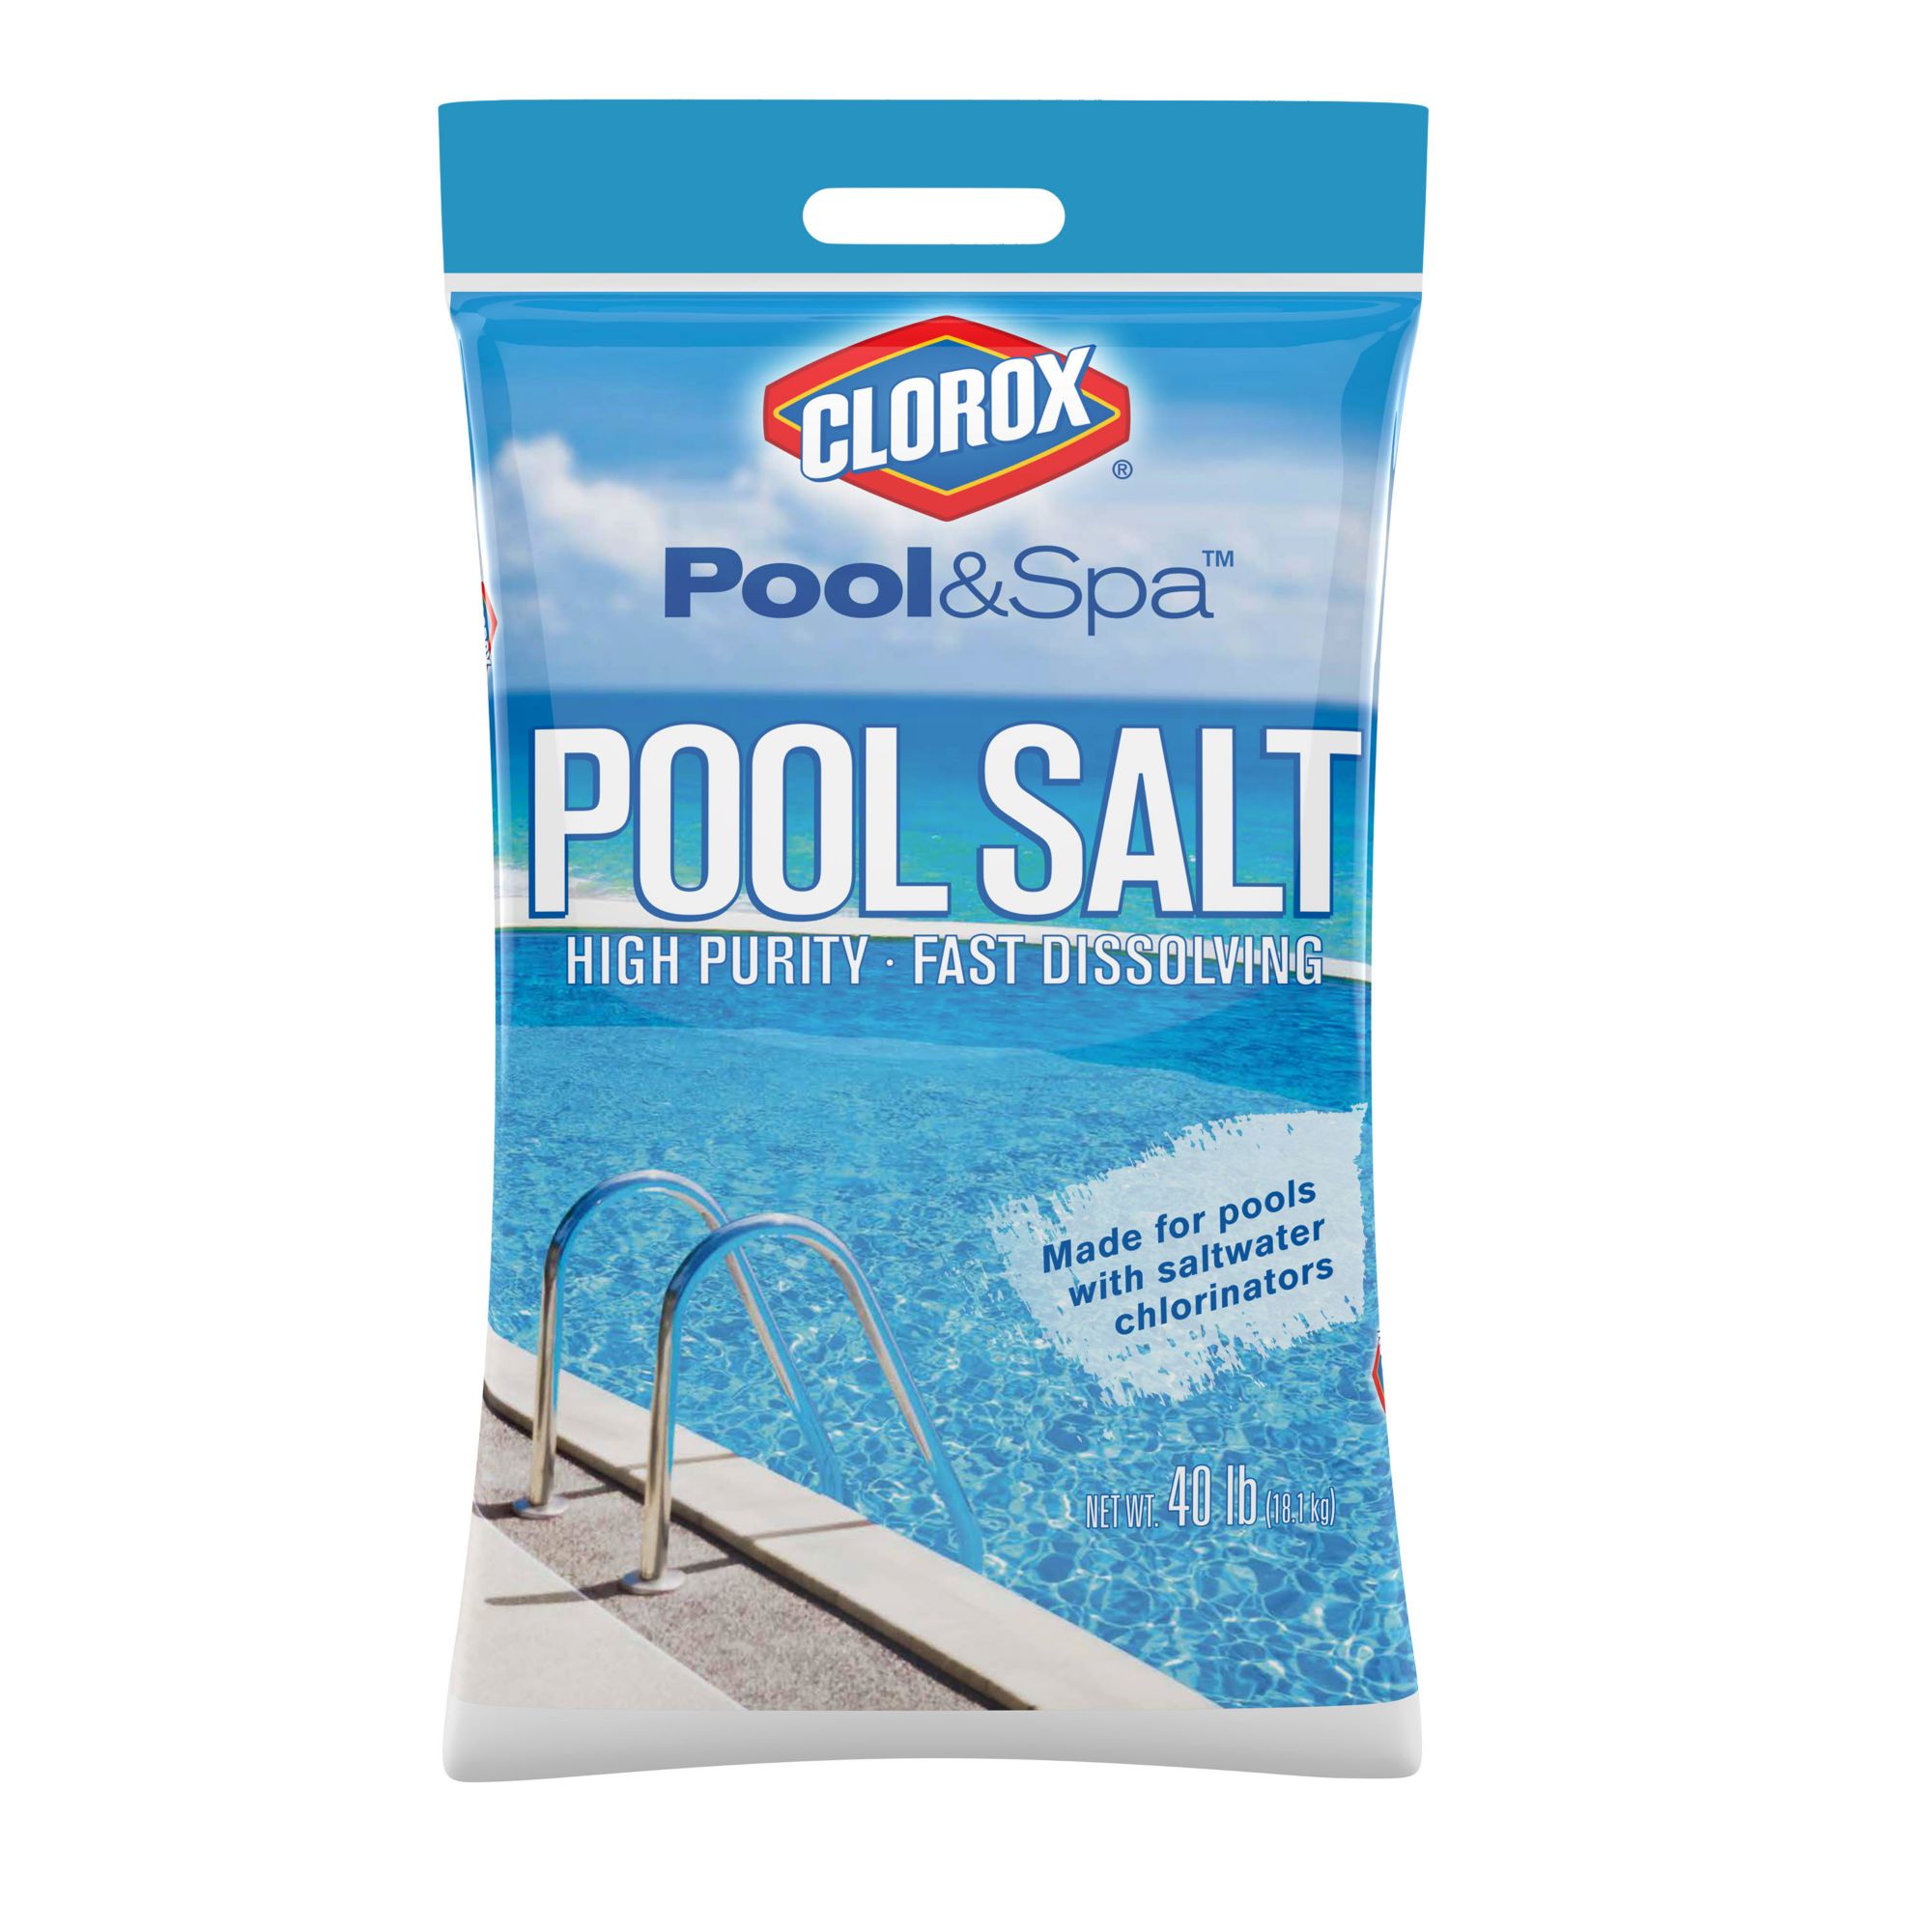 Clorox Pool & Spa Pool Salt, 40 lbs.